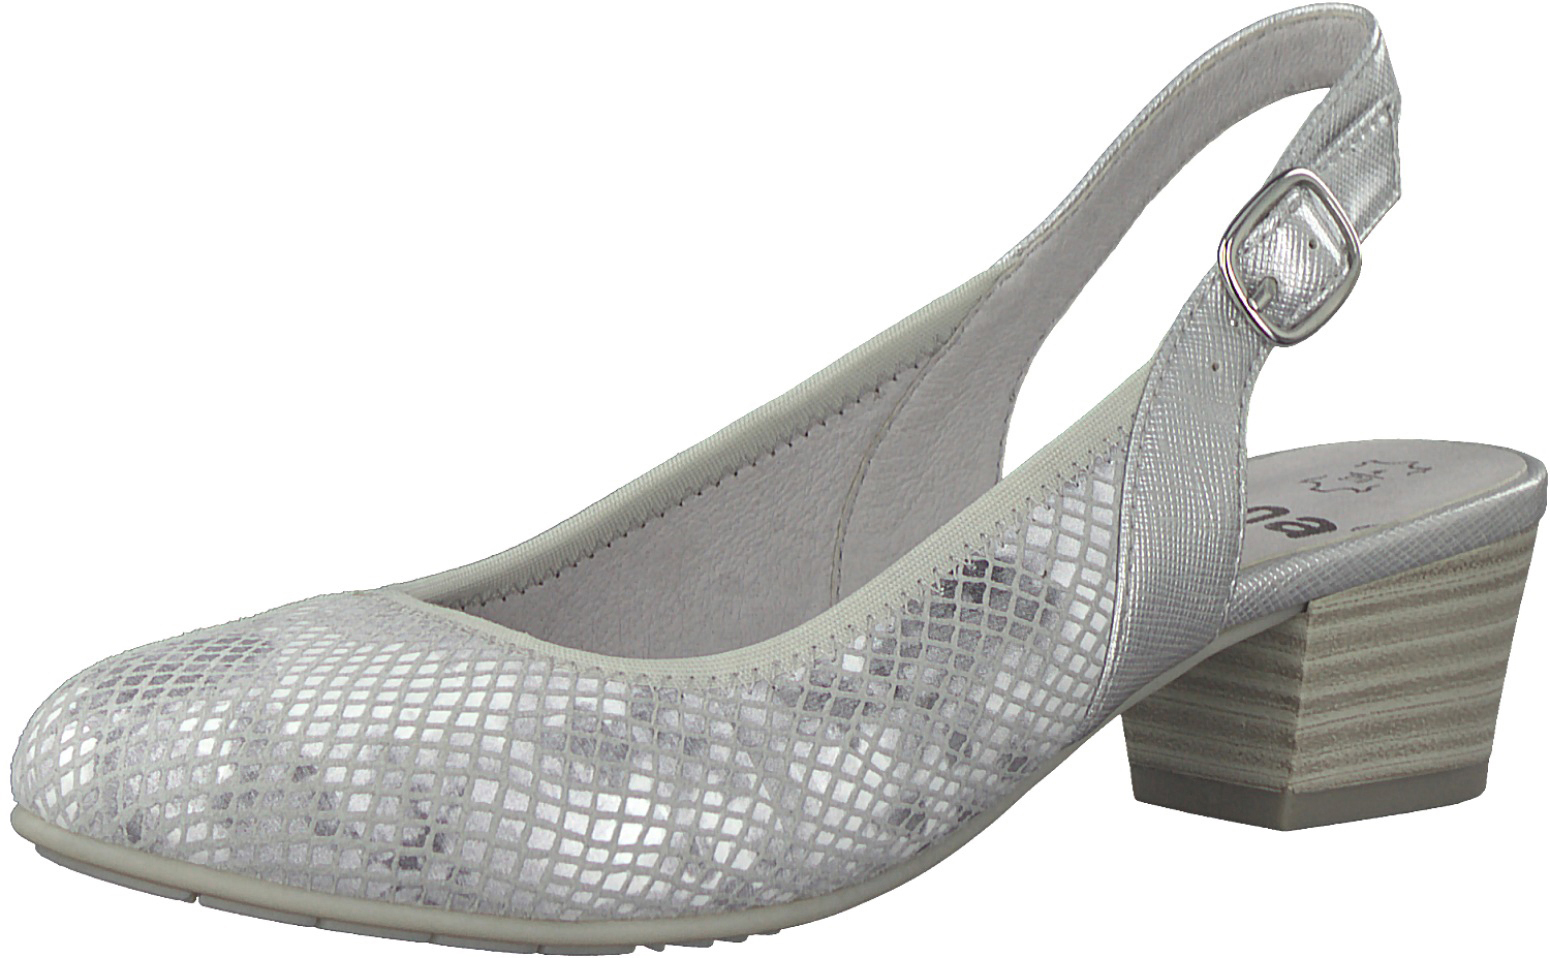 Туфли женские Jana, цвет: серый. 8-8-29590-20-204/220. Размер 40